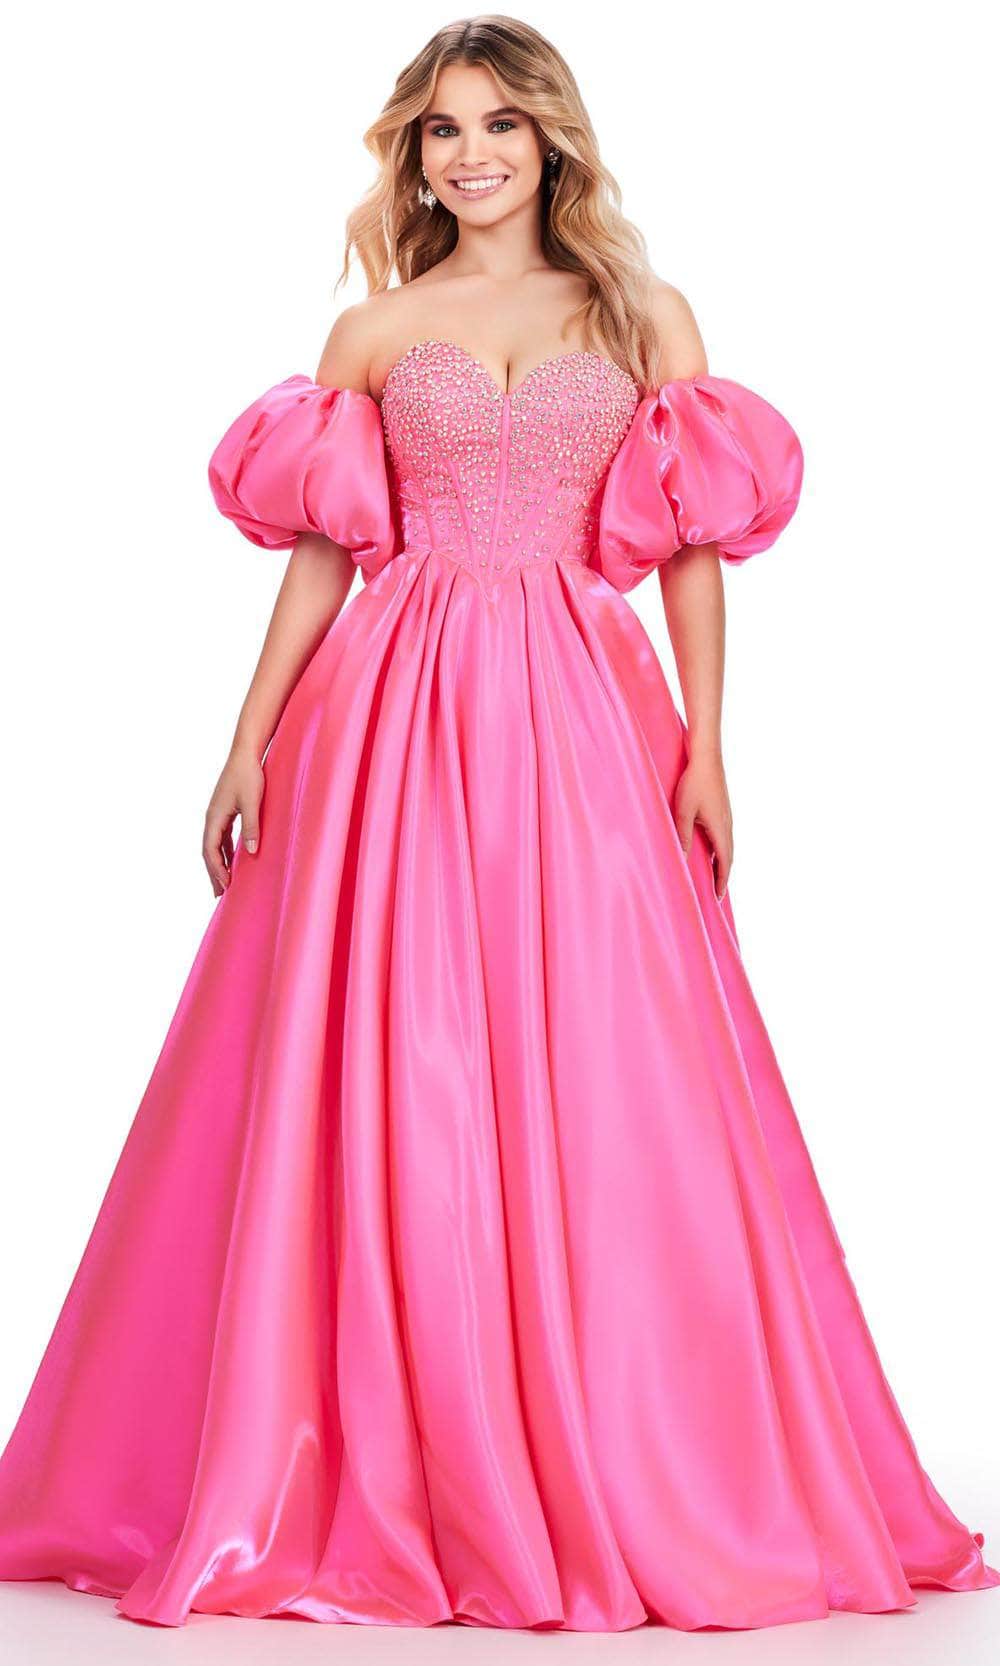 Ashley Lauren 11642 - Bejeweled Sweetheart Prom Dress 00 /  Hot Pink